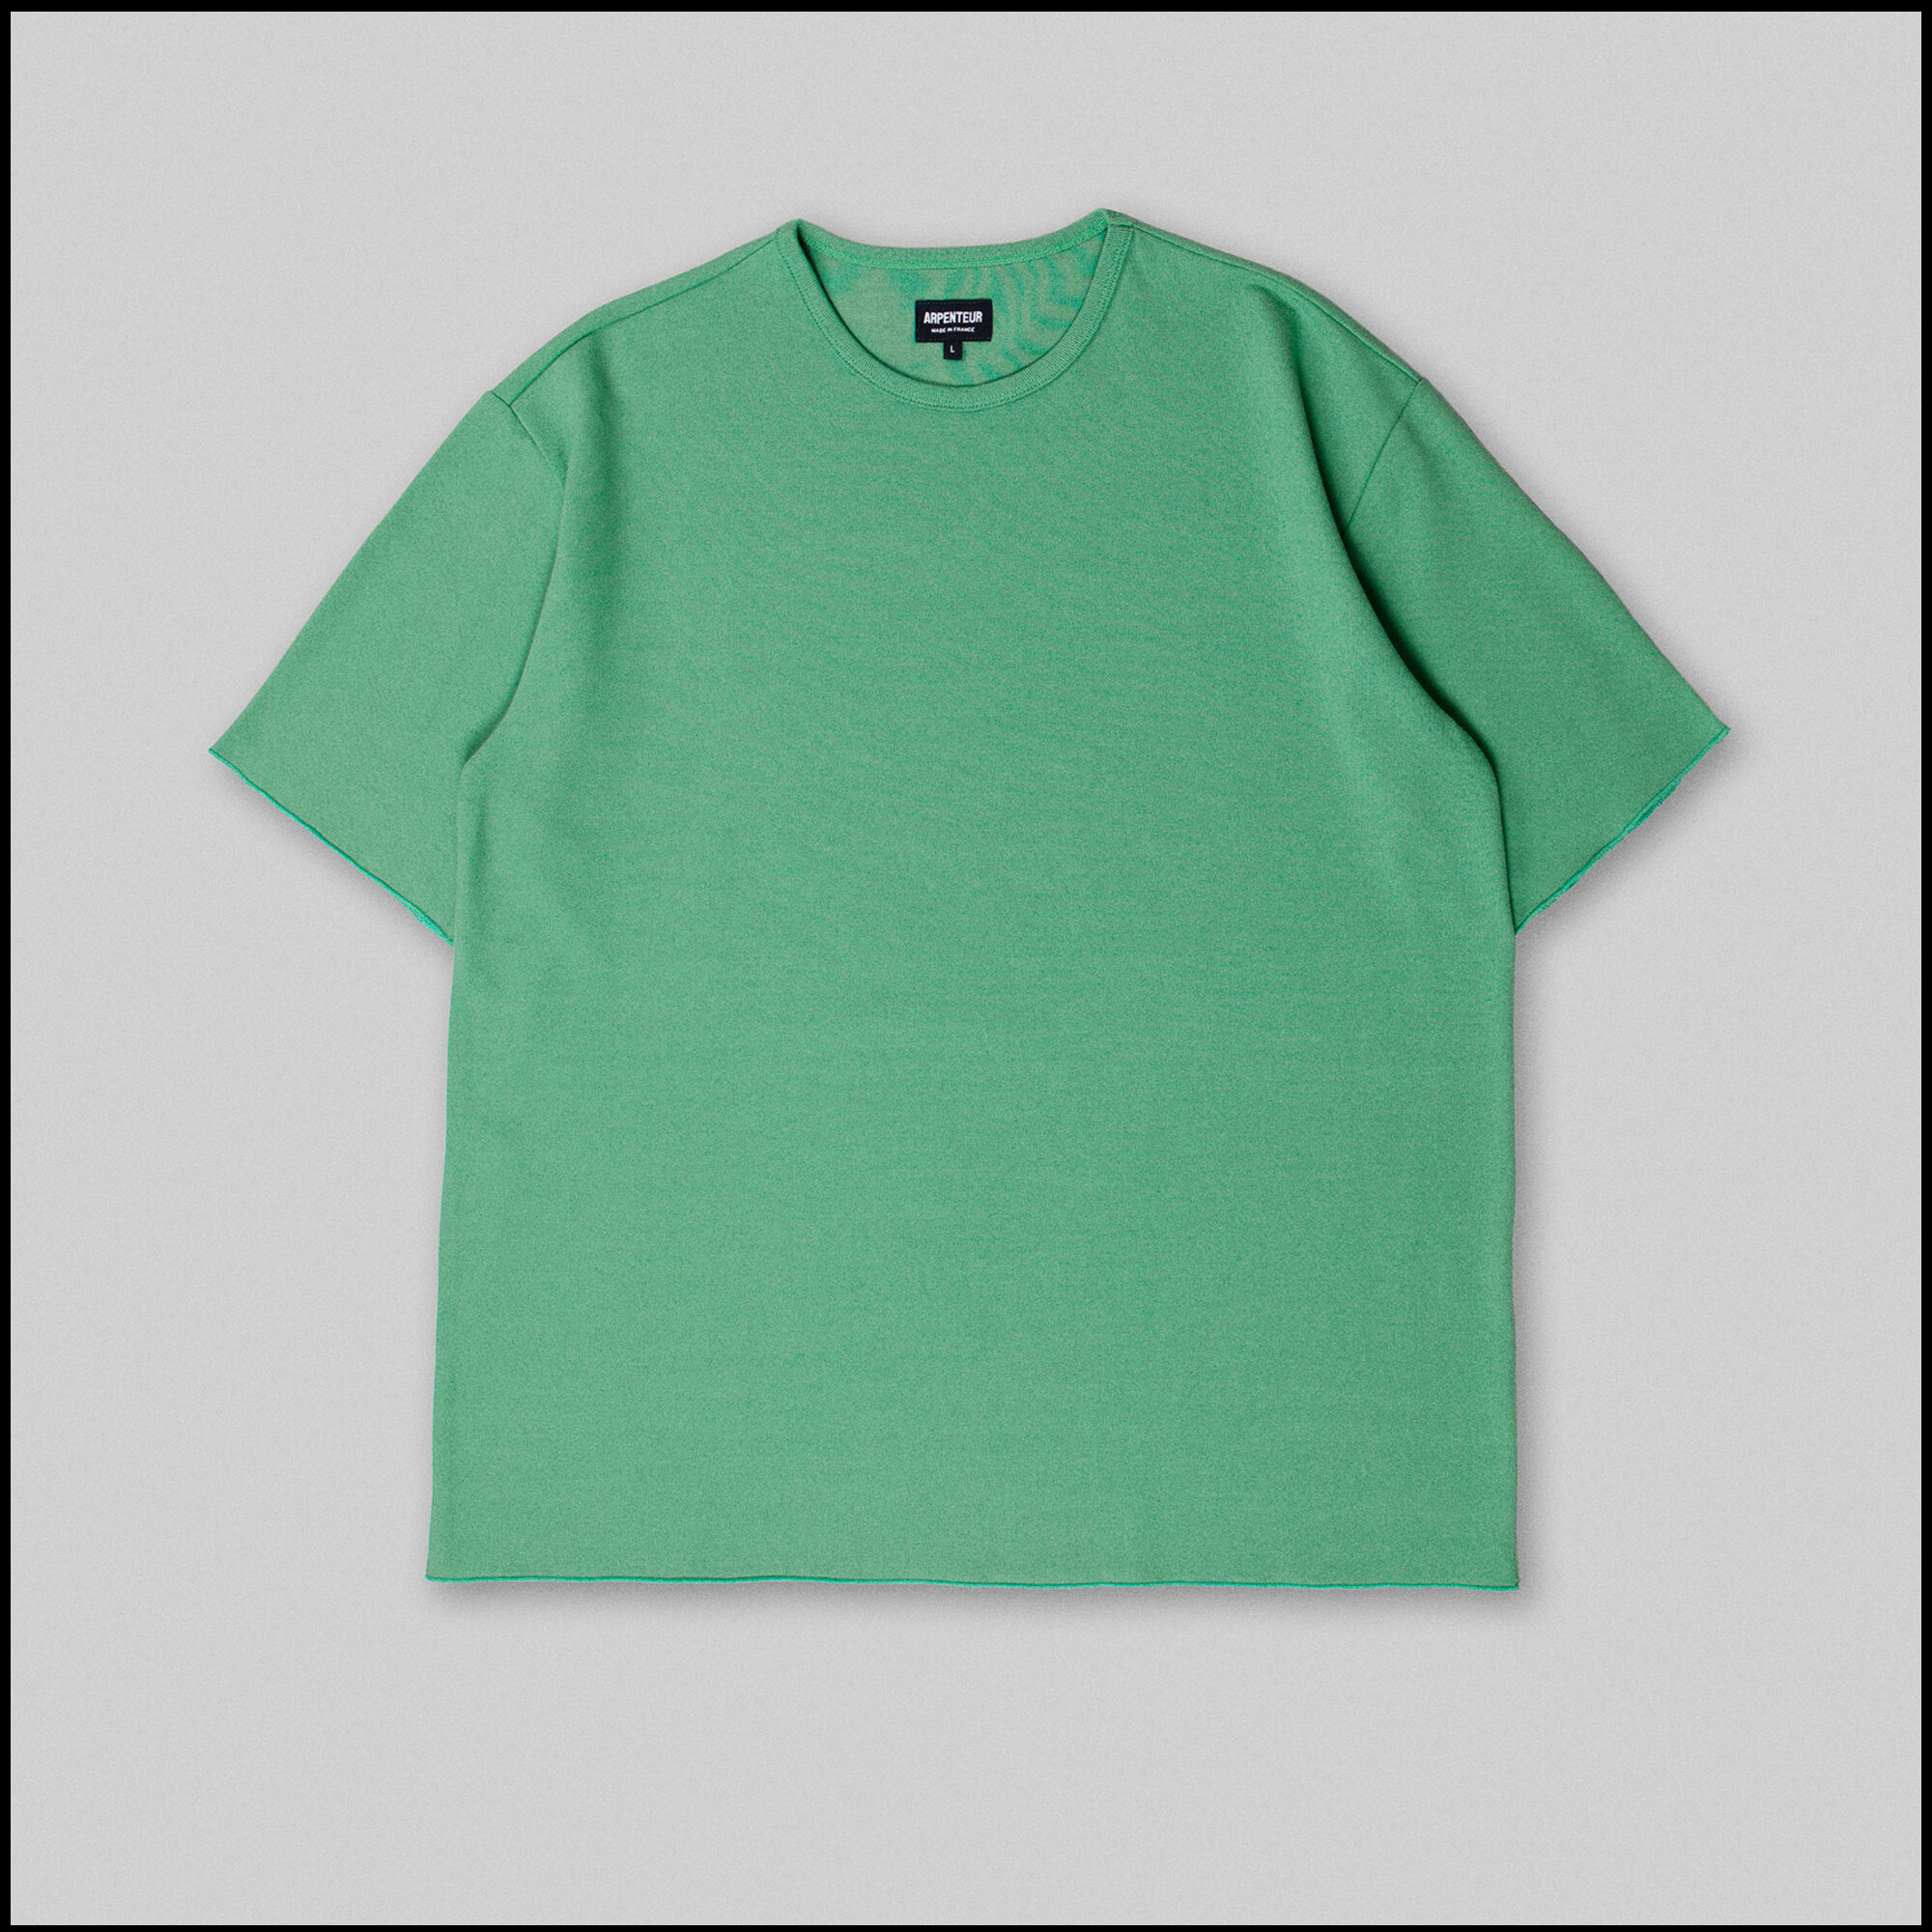 PONTUS t-shirt by Arpenteur in Leaf green color